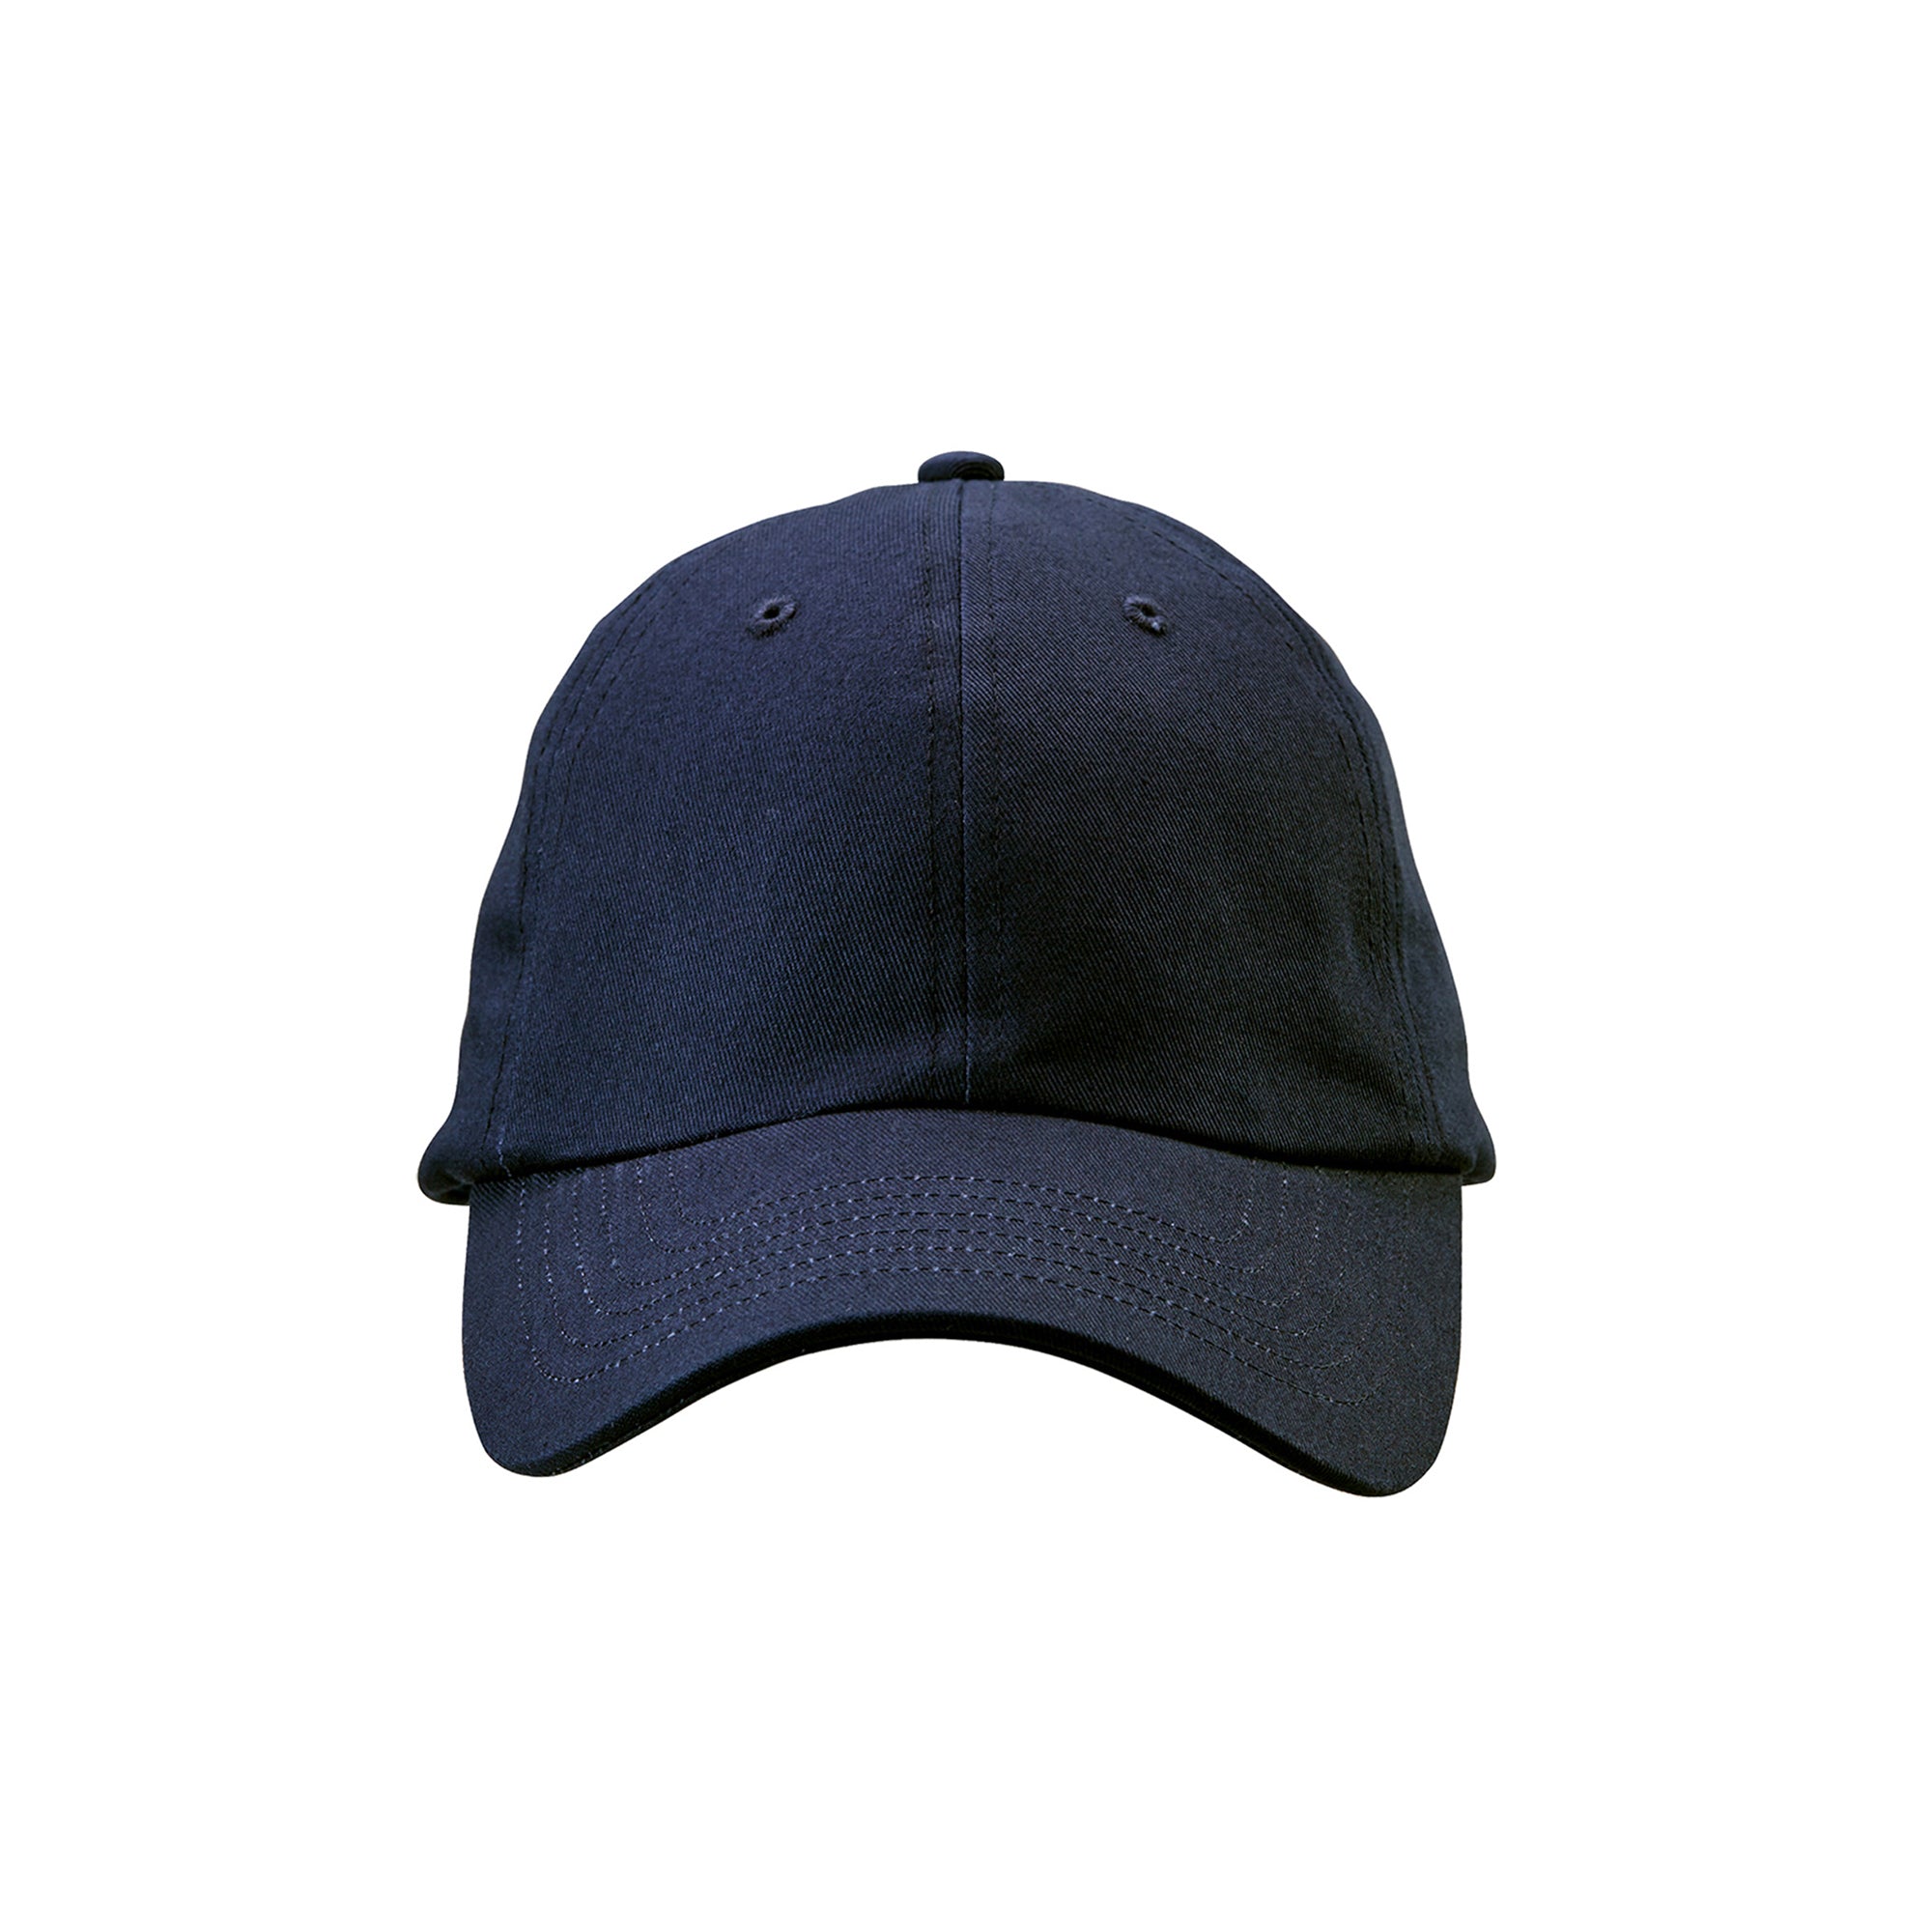 9670 - Baseball Cap - Navy